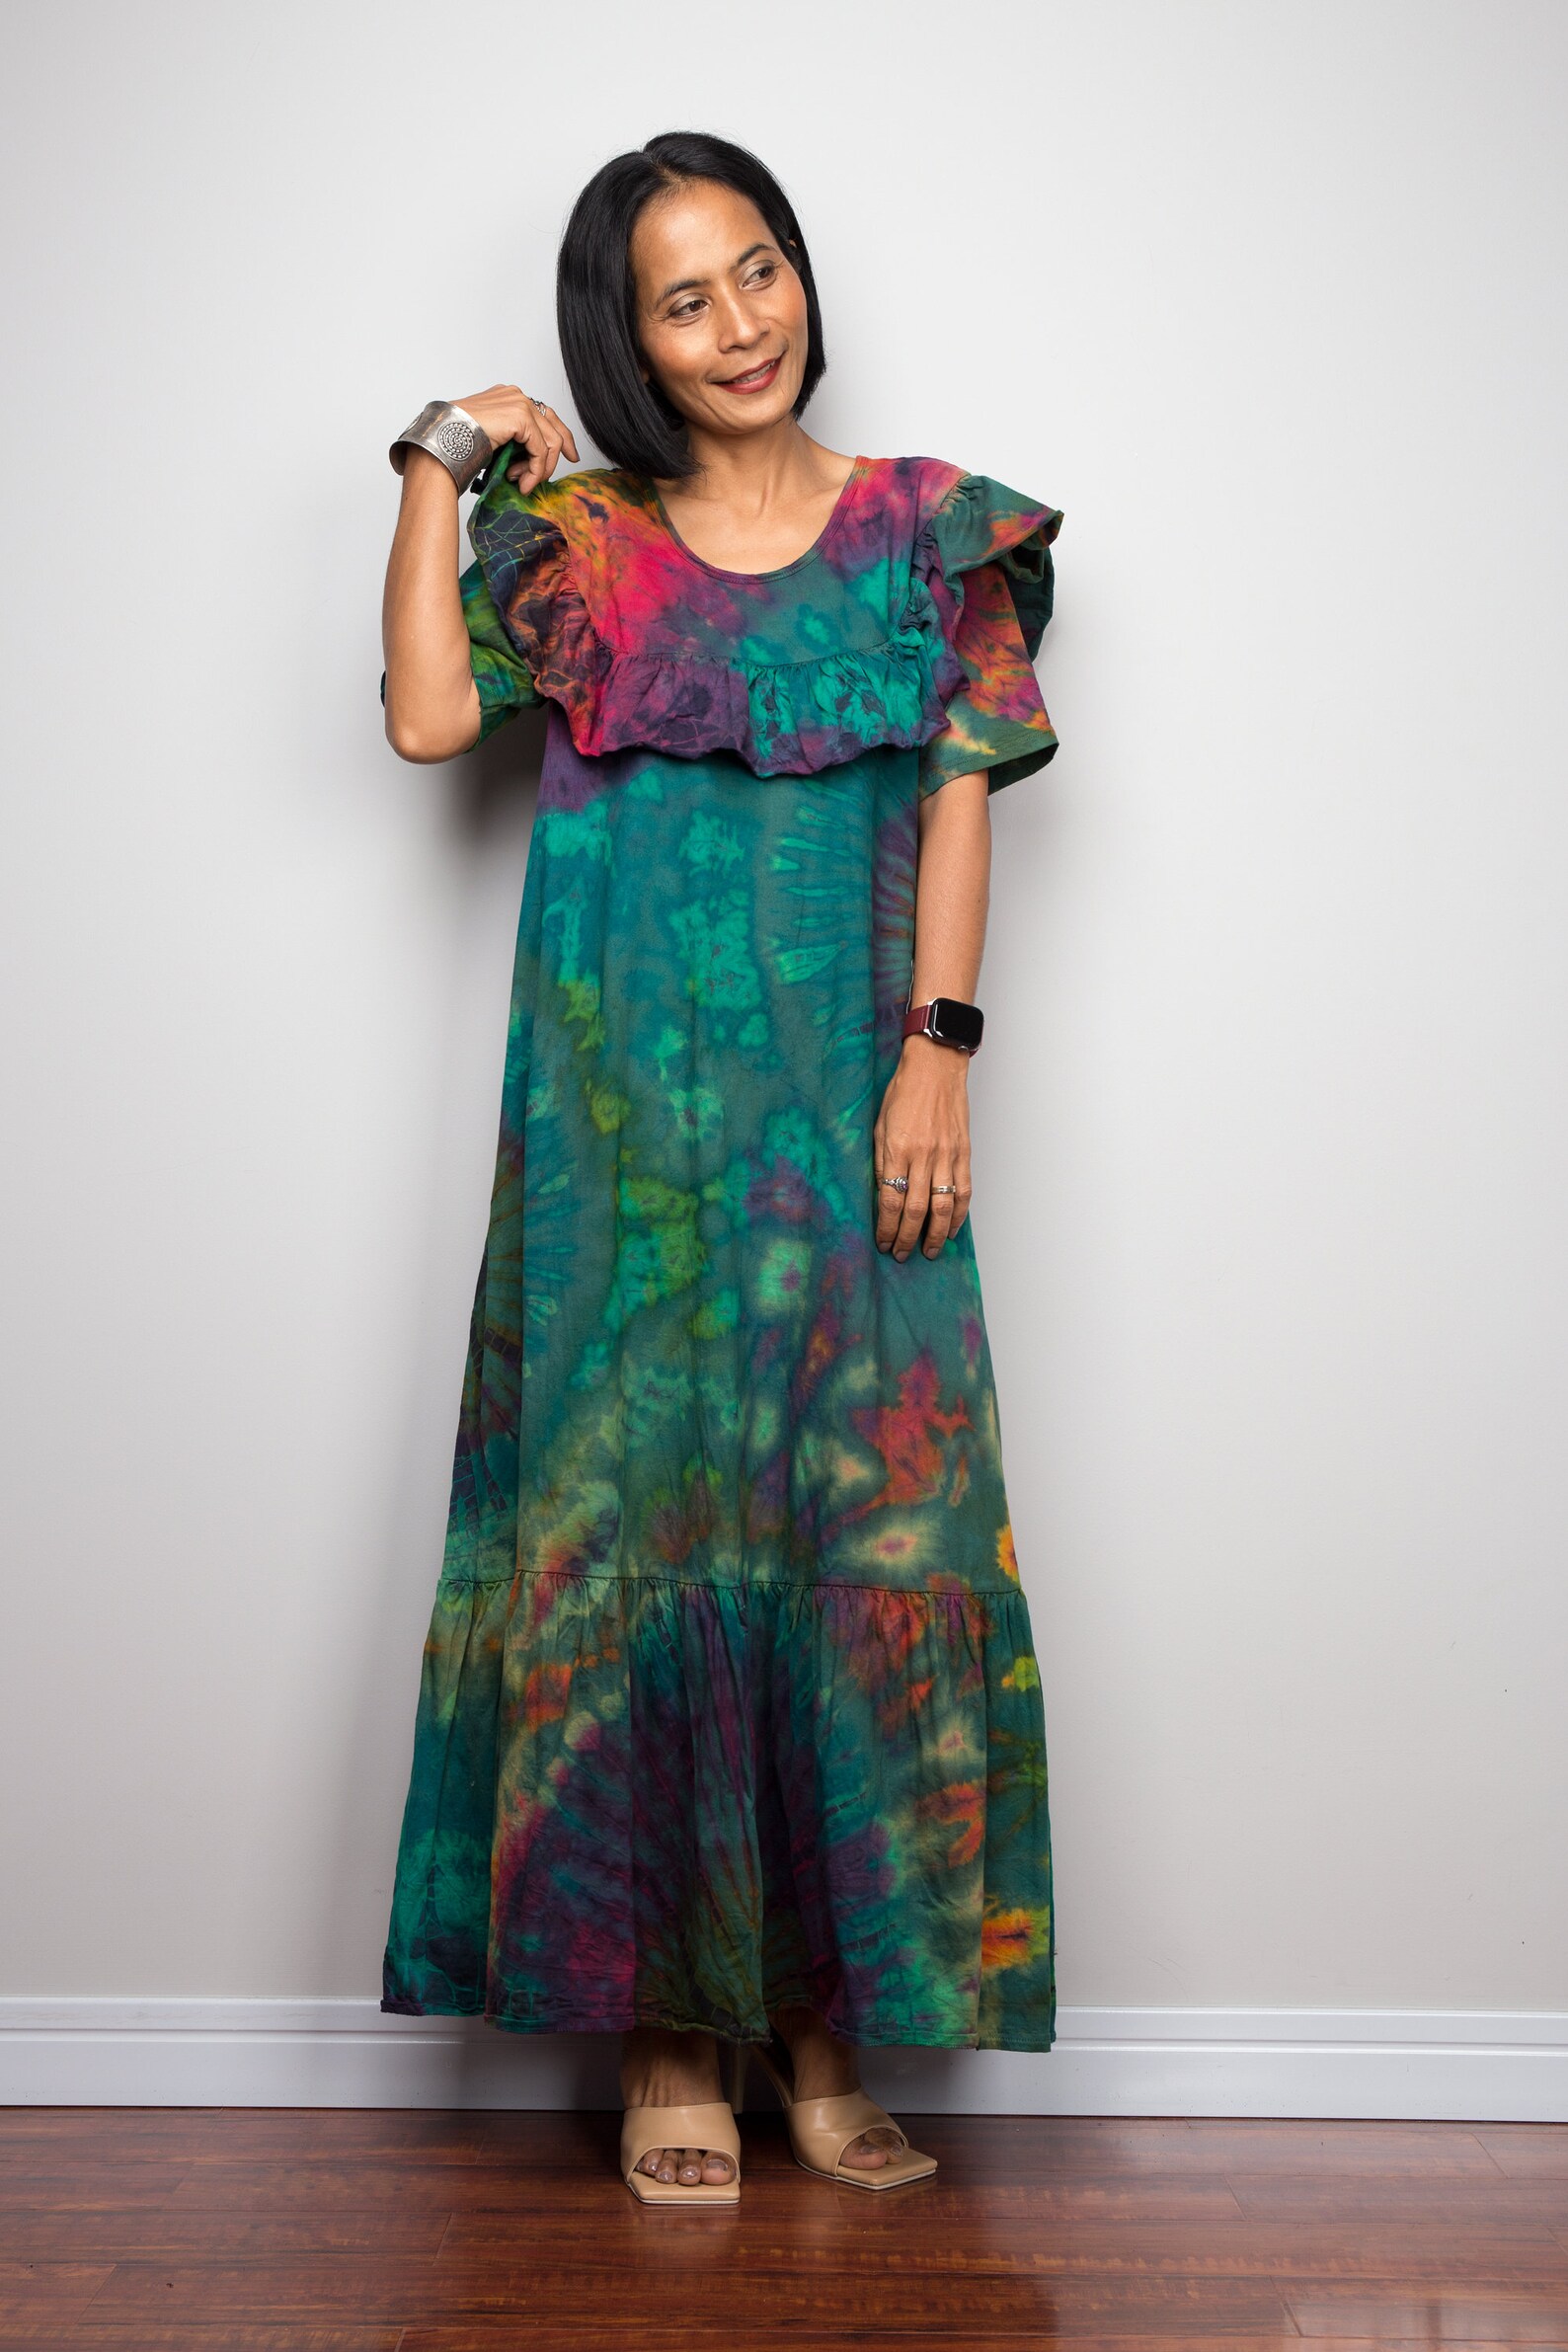 Tie Dye Dress Hippie Festival Midi Dress Gypsy Dress Summer | Etsy